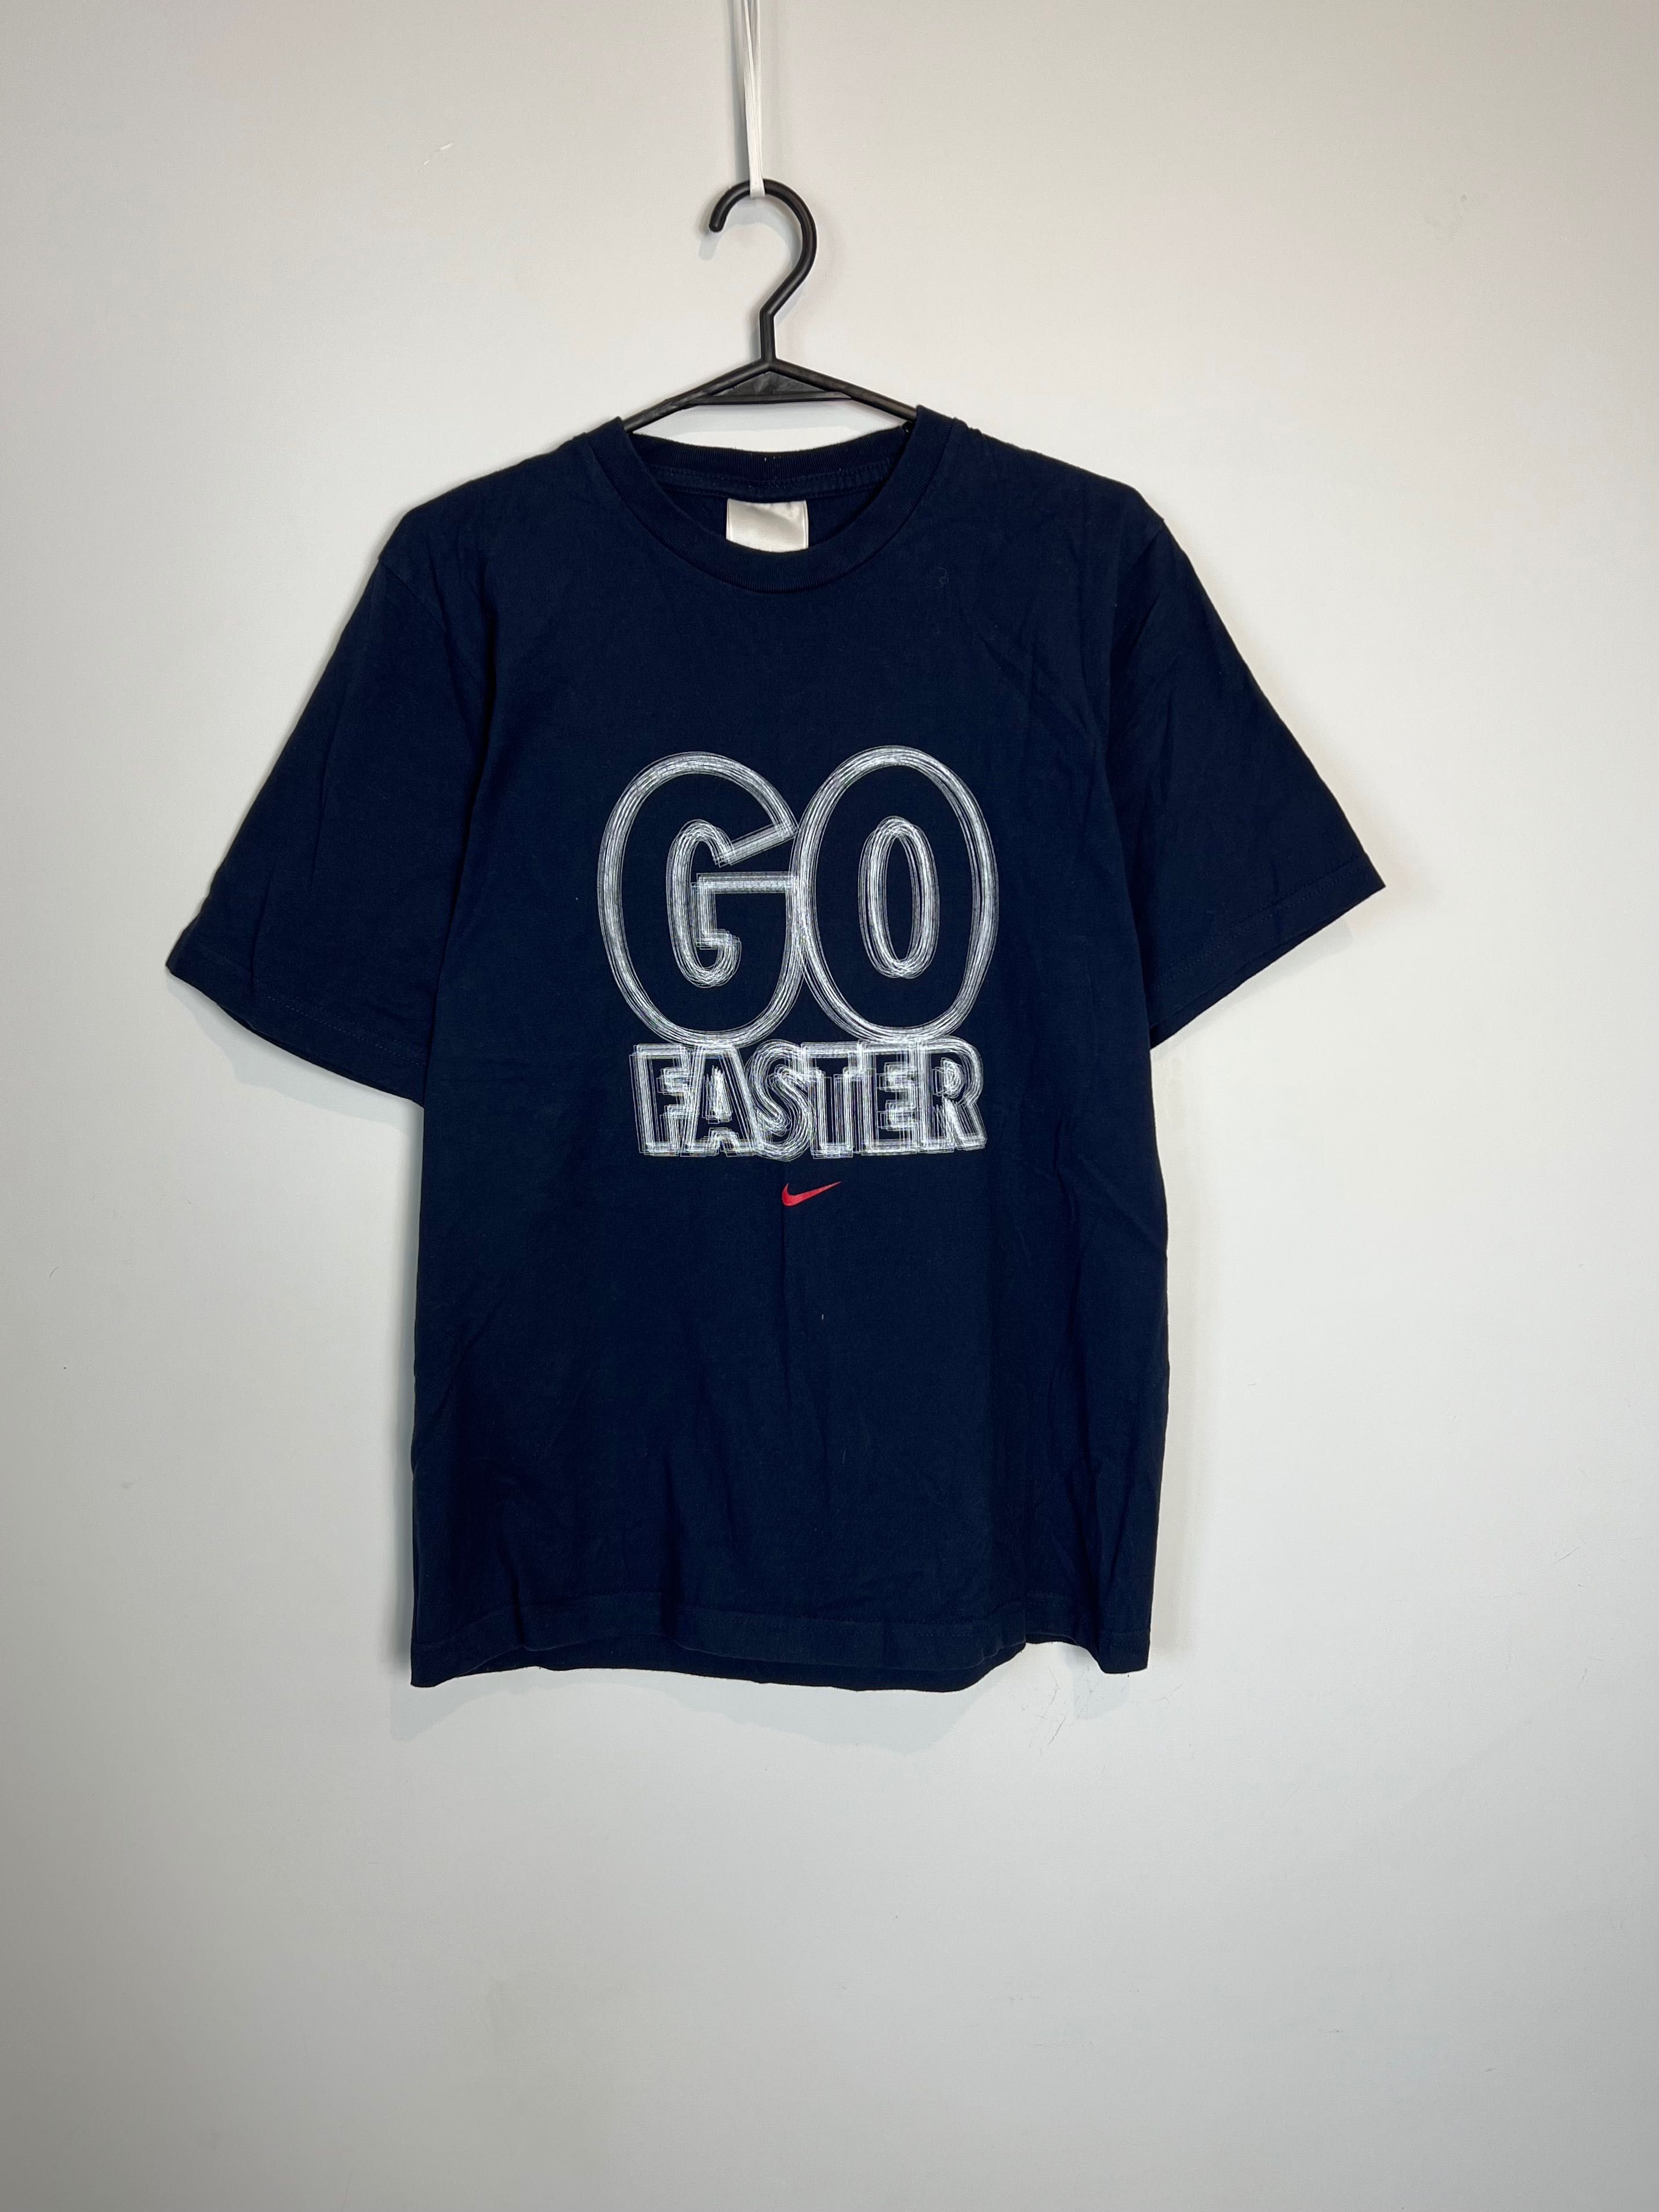 Tshirt koszulka Nike GO Faster vintage center swoosh navy